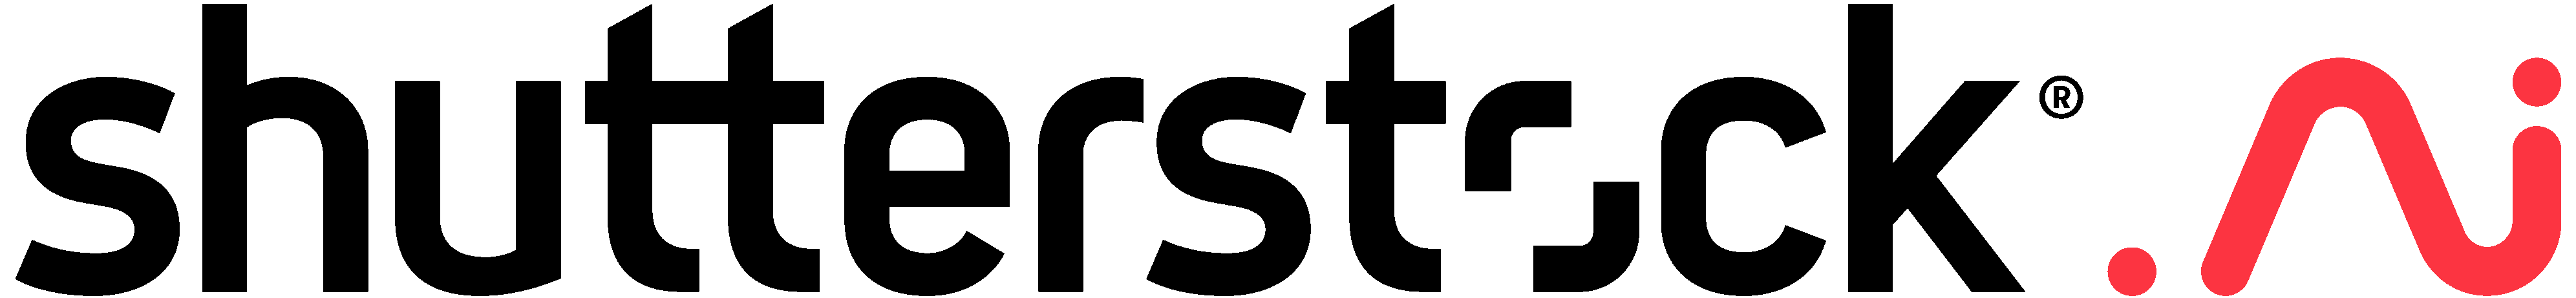 Shutterstock.AI logo - full color